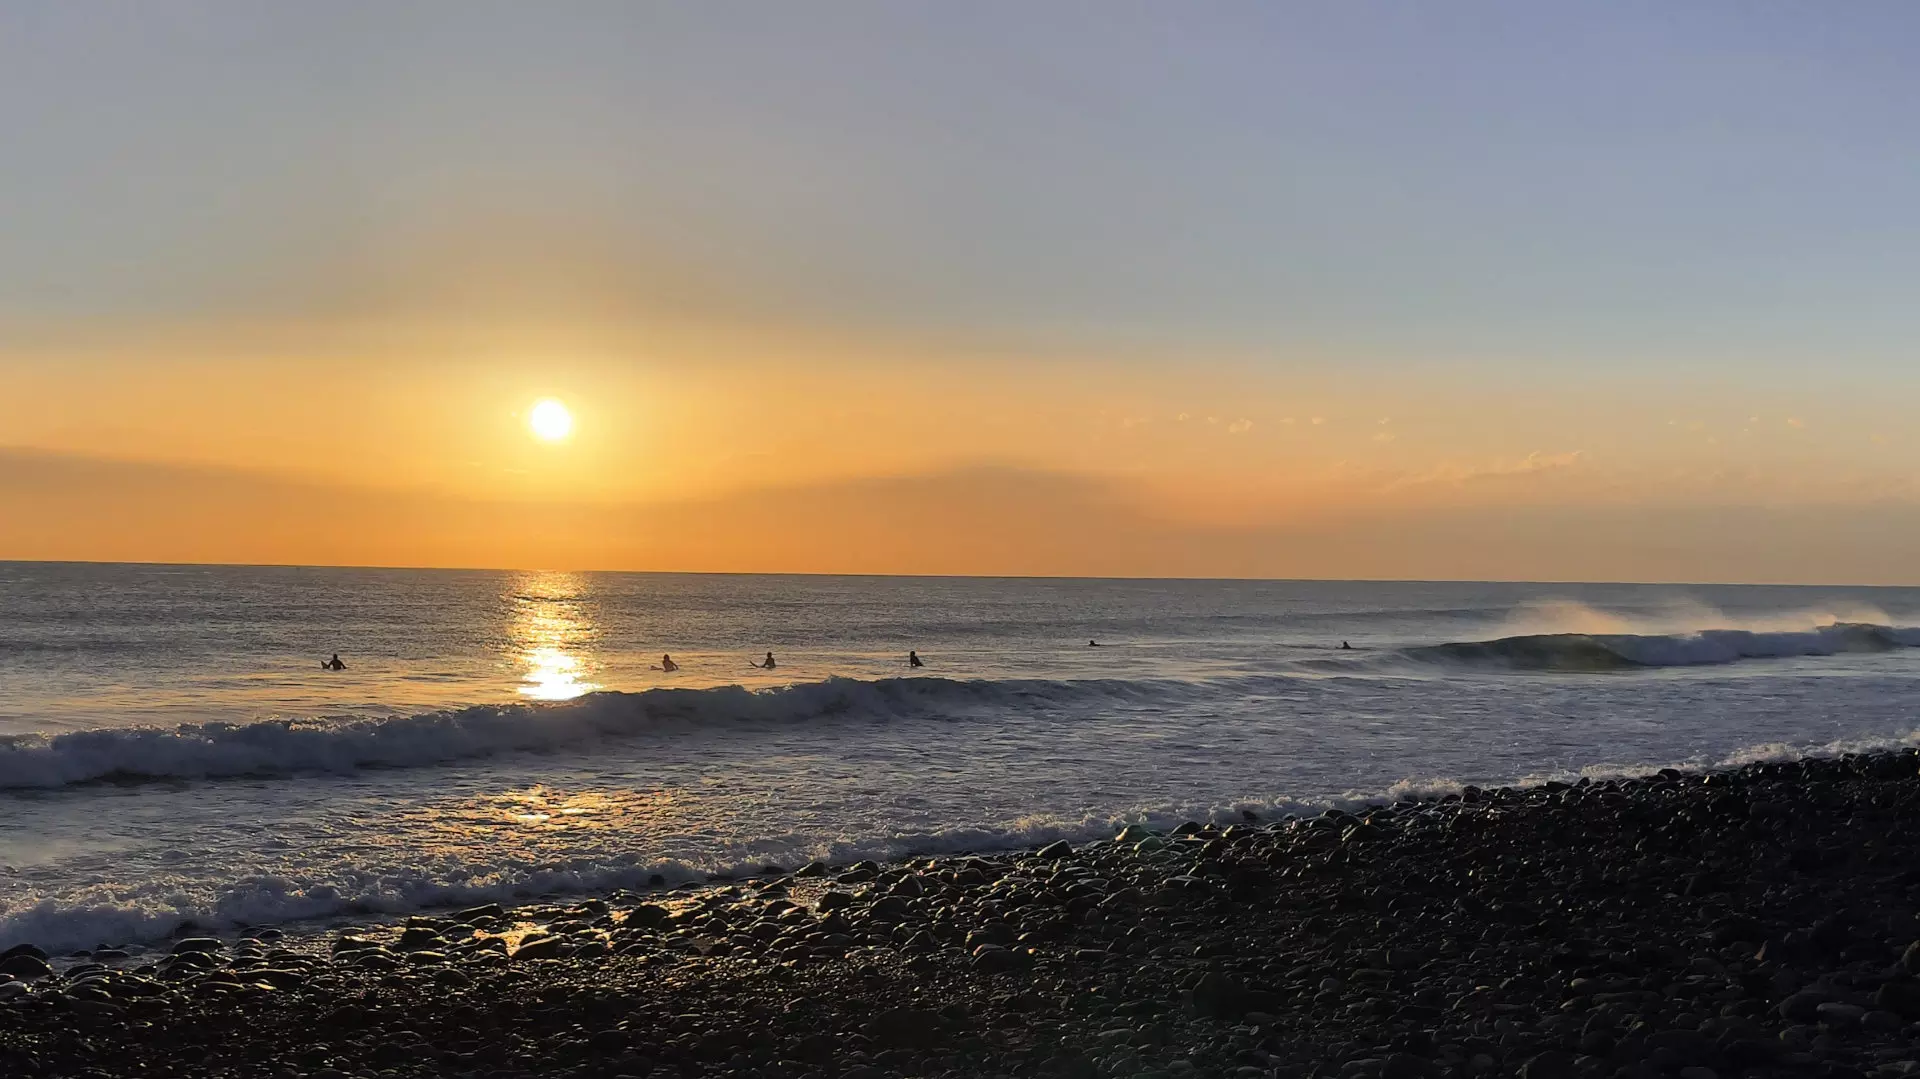 Surfer im Sonnenuntergang